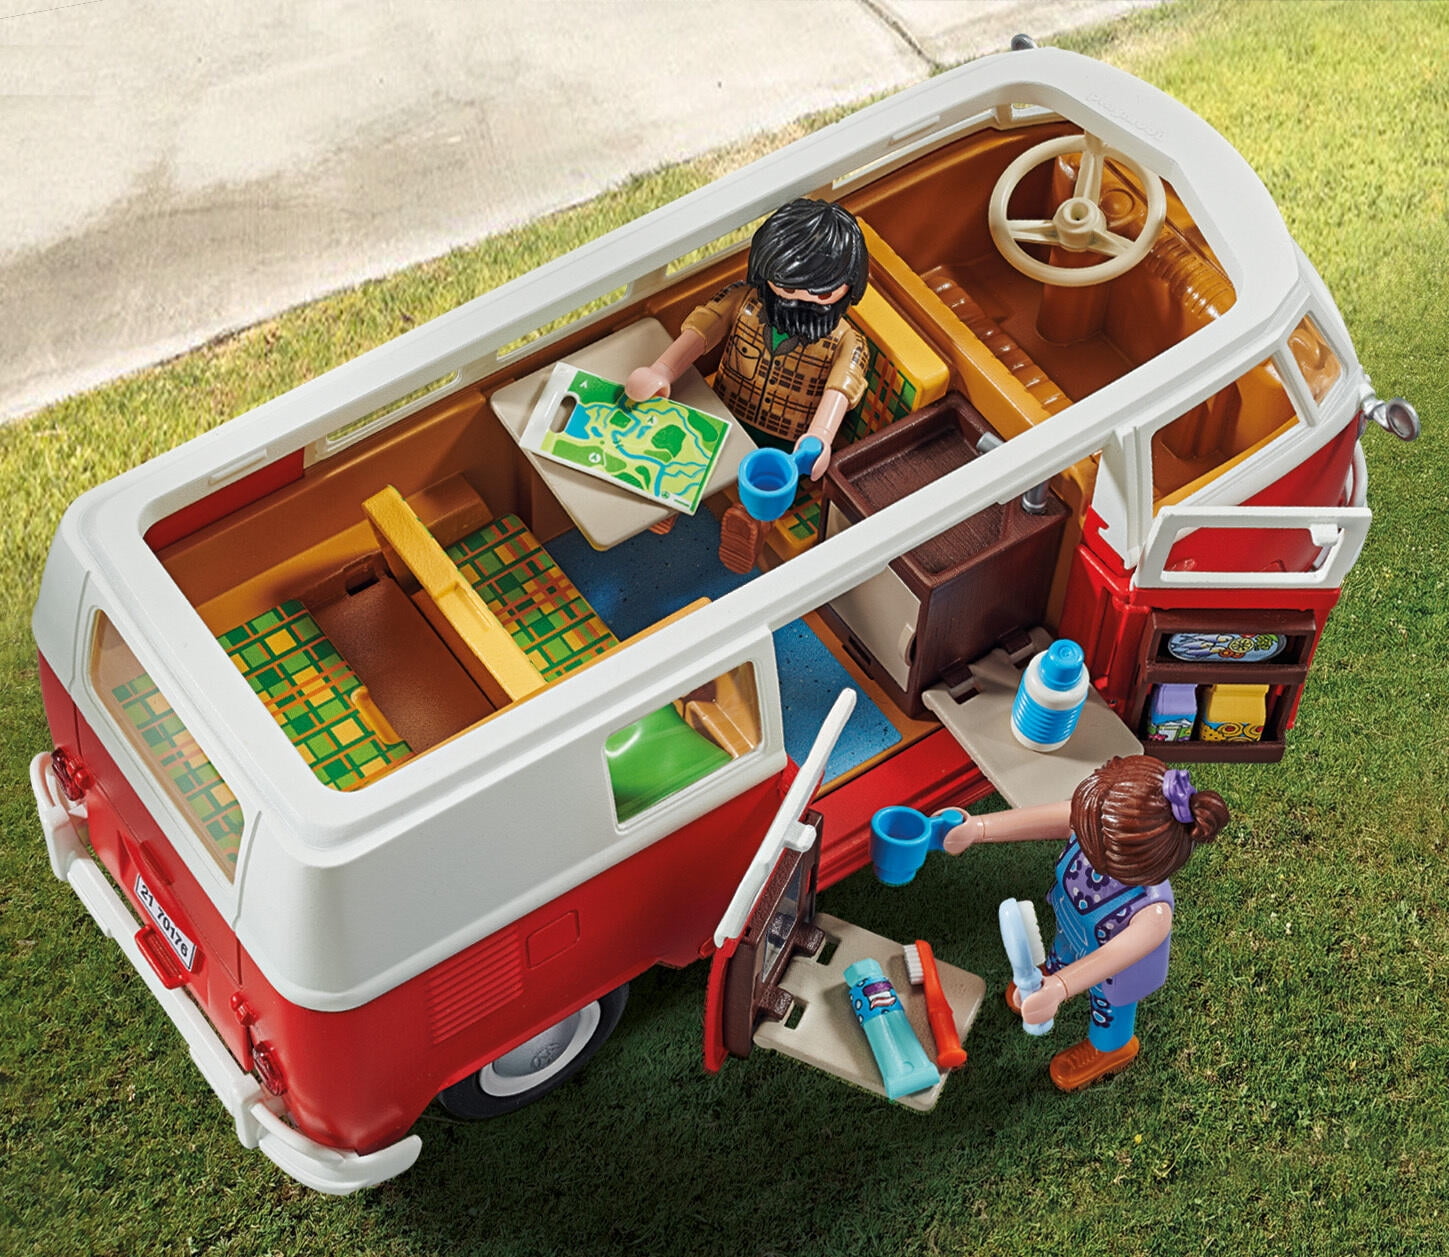 Playmobil Safari Car and Bus Camper Van in Toy Vintage Old Ancient  Campervan for Kids Editorial Photo - Image of entertainment, emblem:  238088591